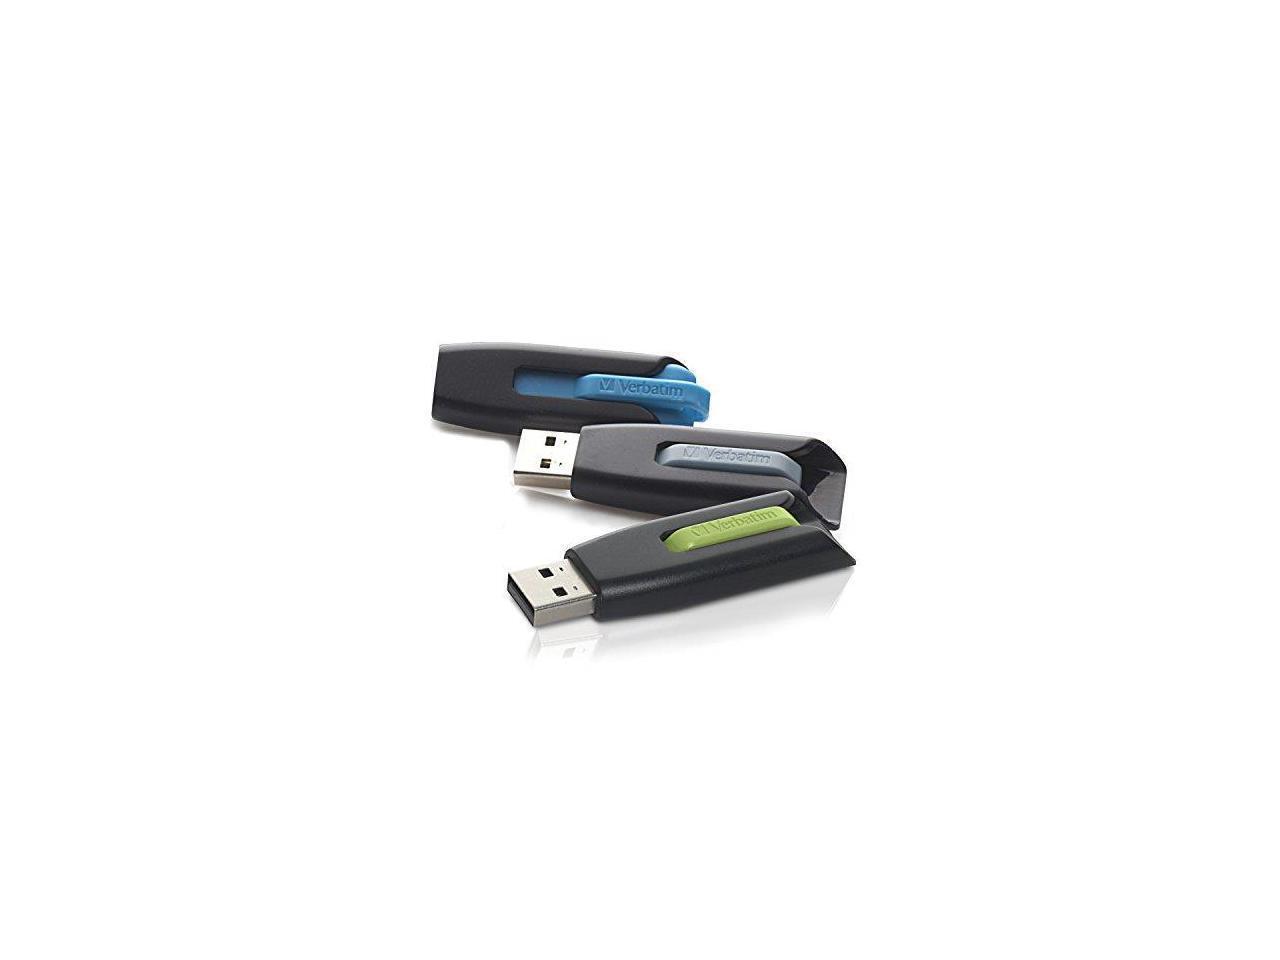 Verbatim Store 'n' Go V3 16GB USB 3.0 Flash Drive - 3pk - Blue, Green, Gray Mode